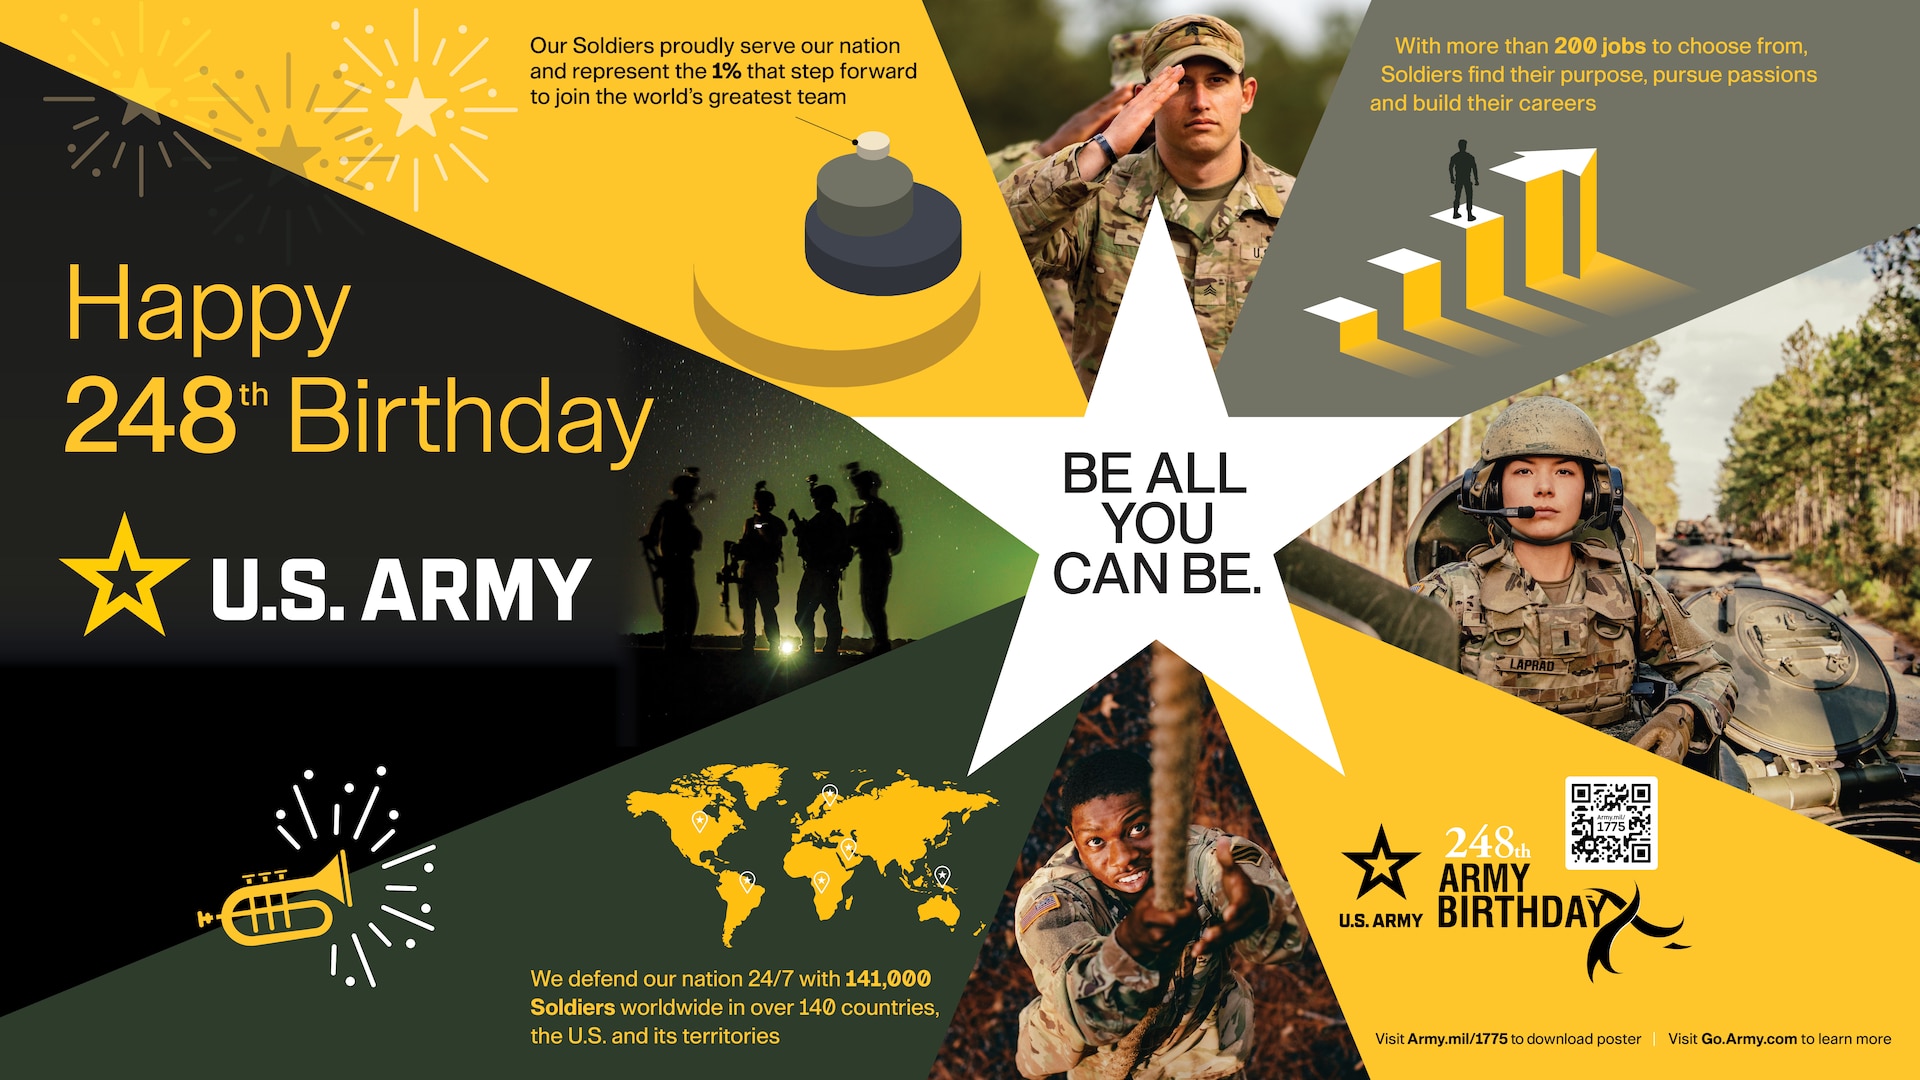 ARNORTH to host Army birthday ceremony at historic Quadrangle June 14